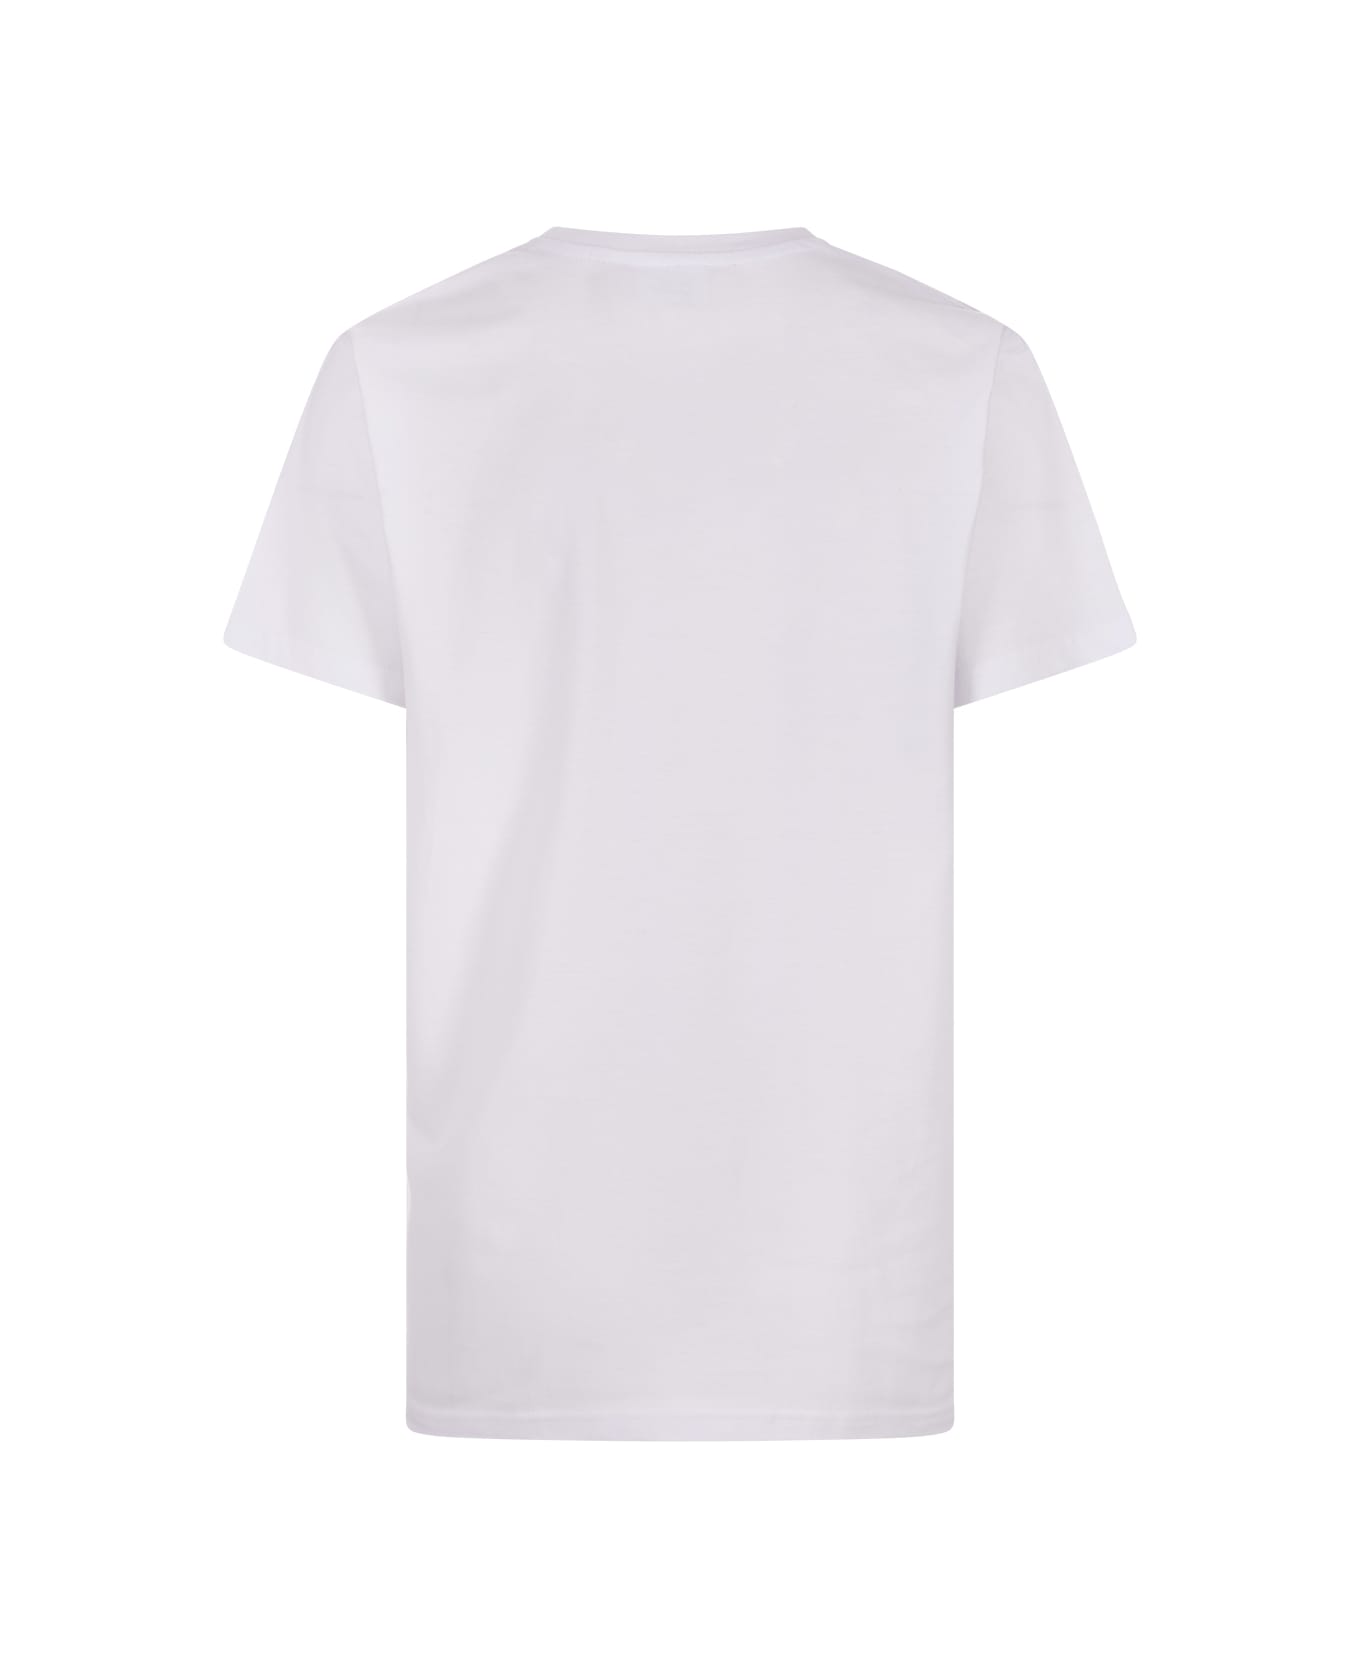 Alessandro Enriquez White "i Was A Mermaid" T-shirt - White Tシャツ